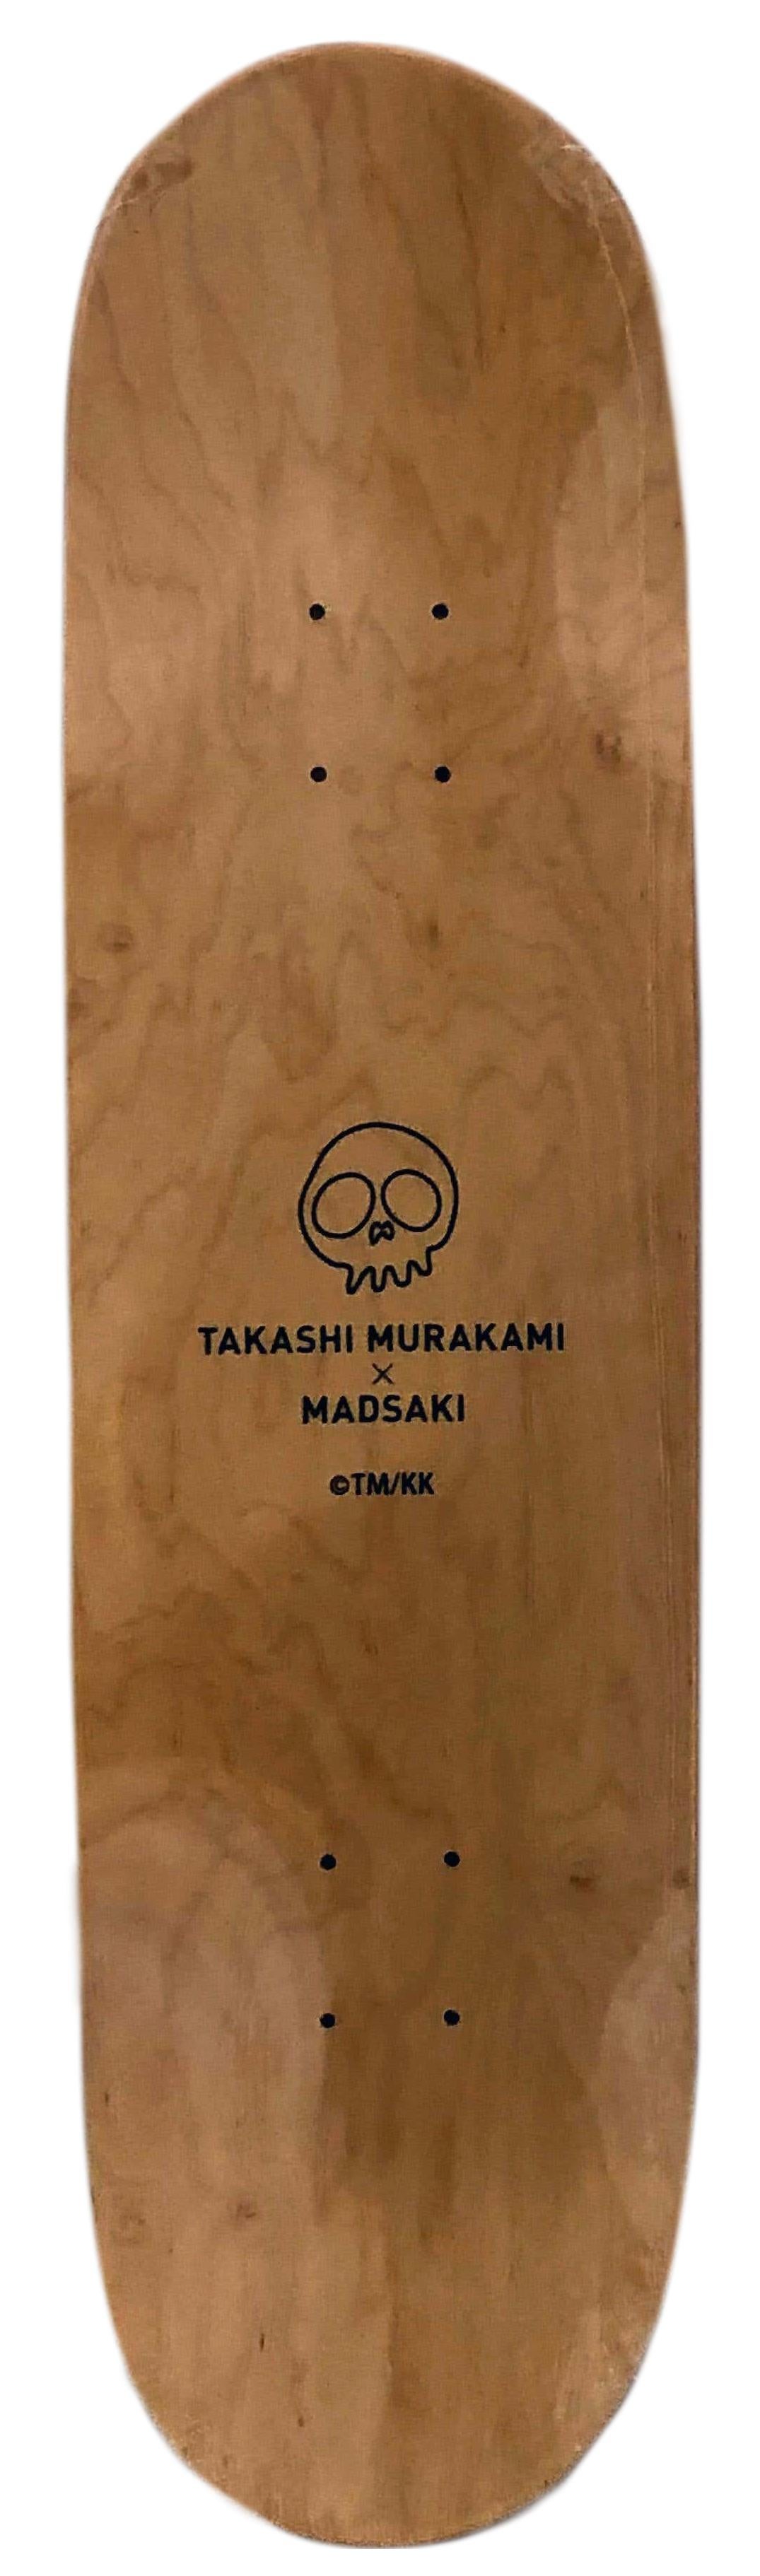 Takashi Murakami Flowers Skateboard Decks: set of 3 works (Murakami skateboard) For Sale 6